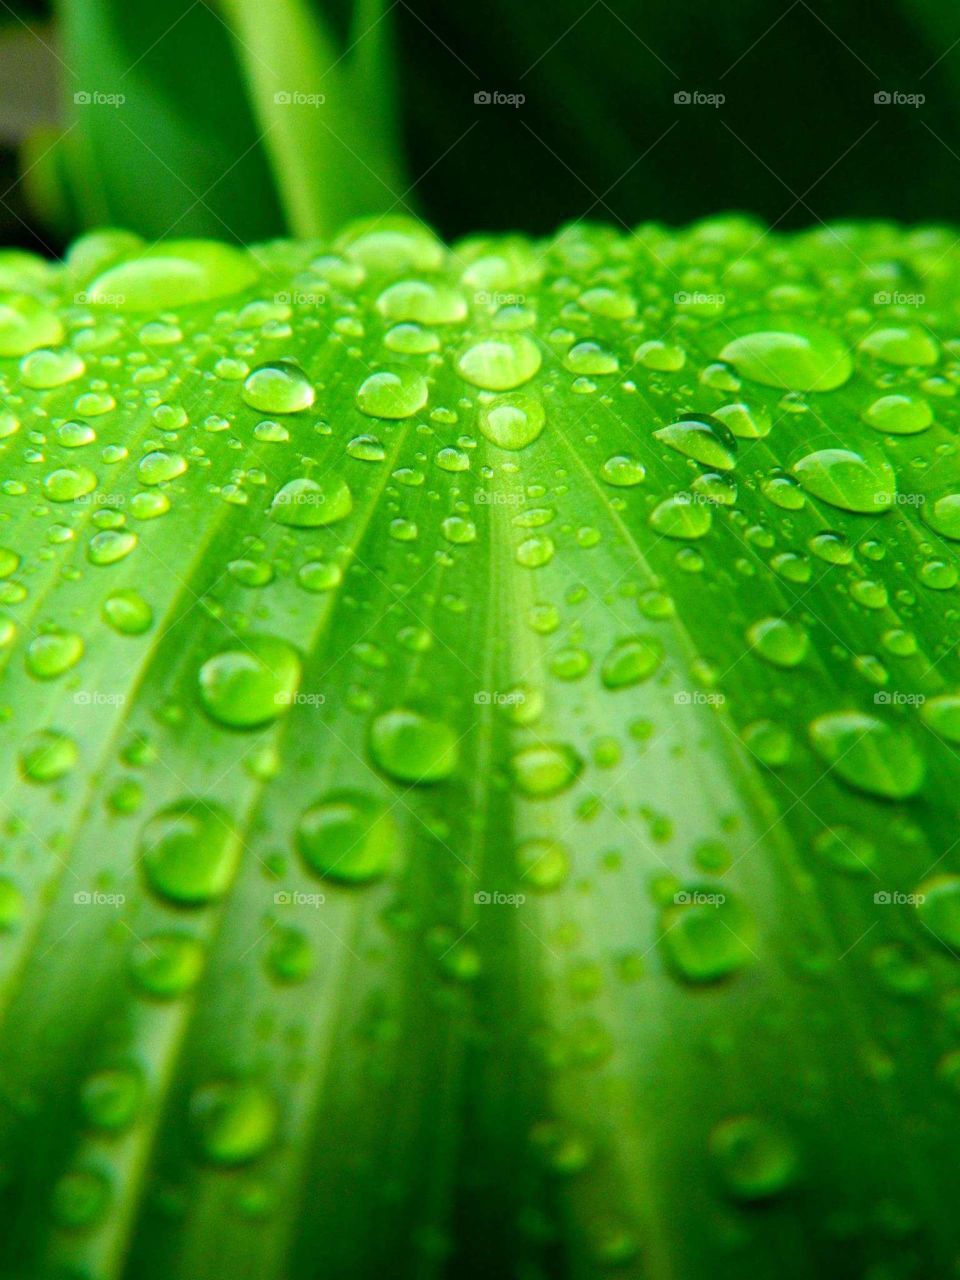 Droplets on a ti leaf plant